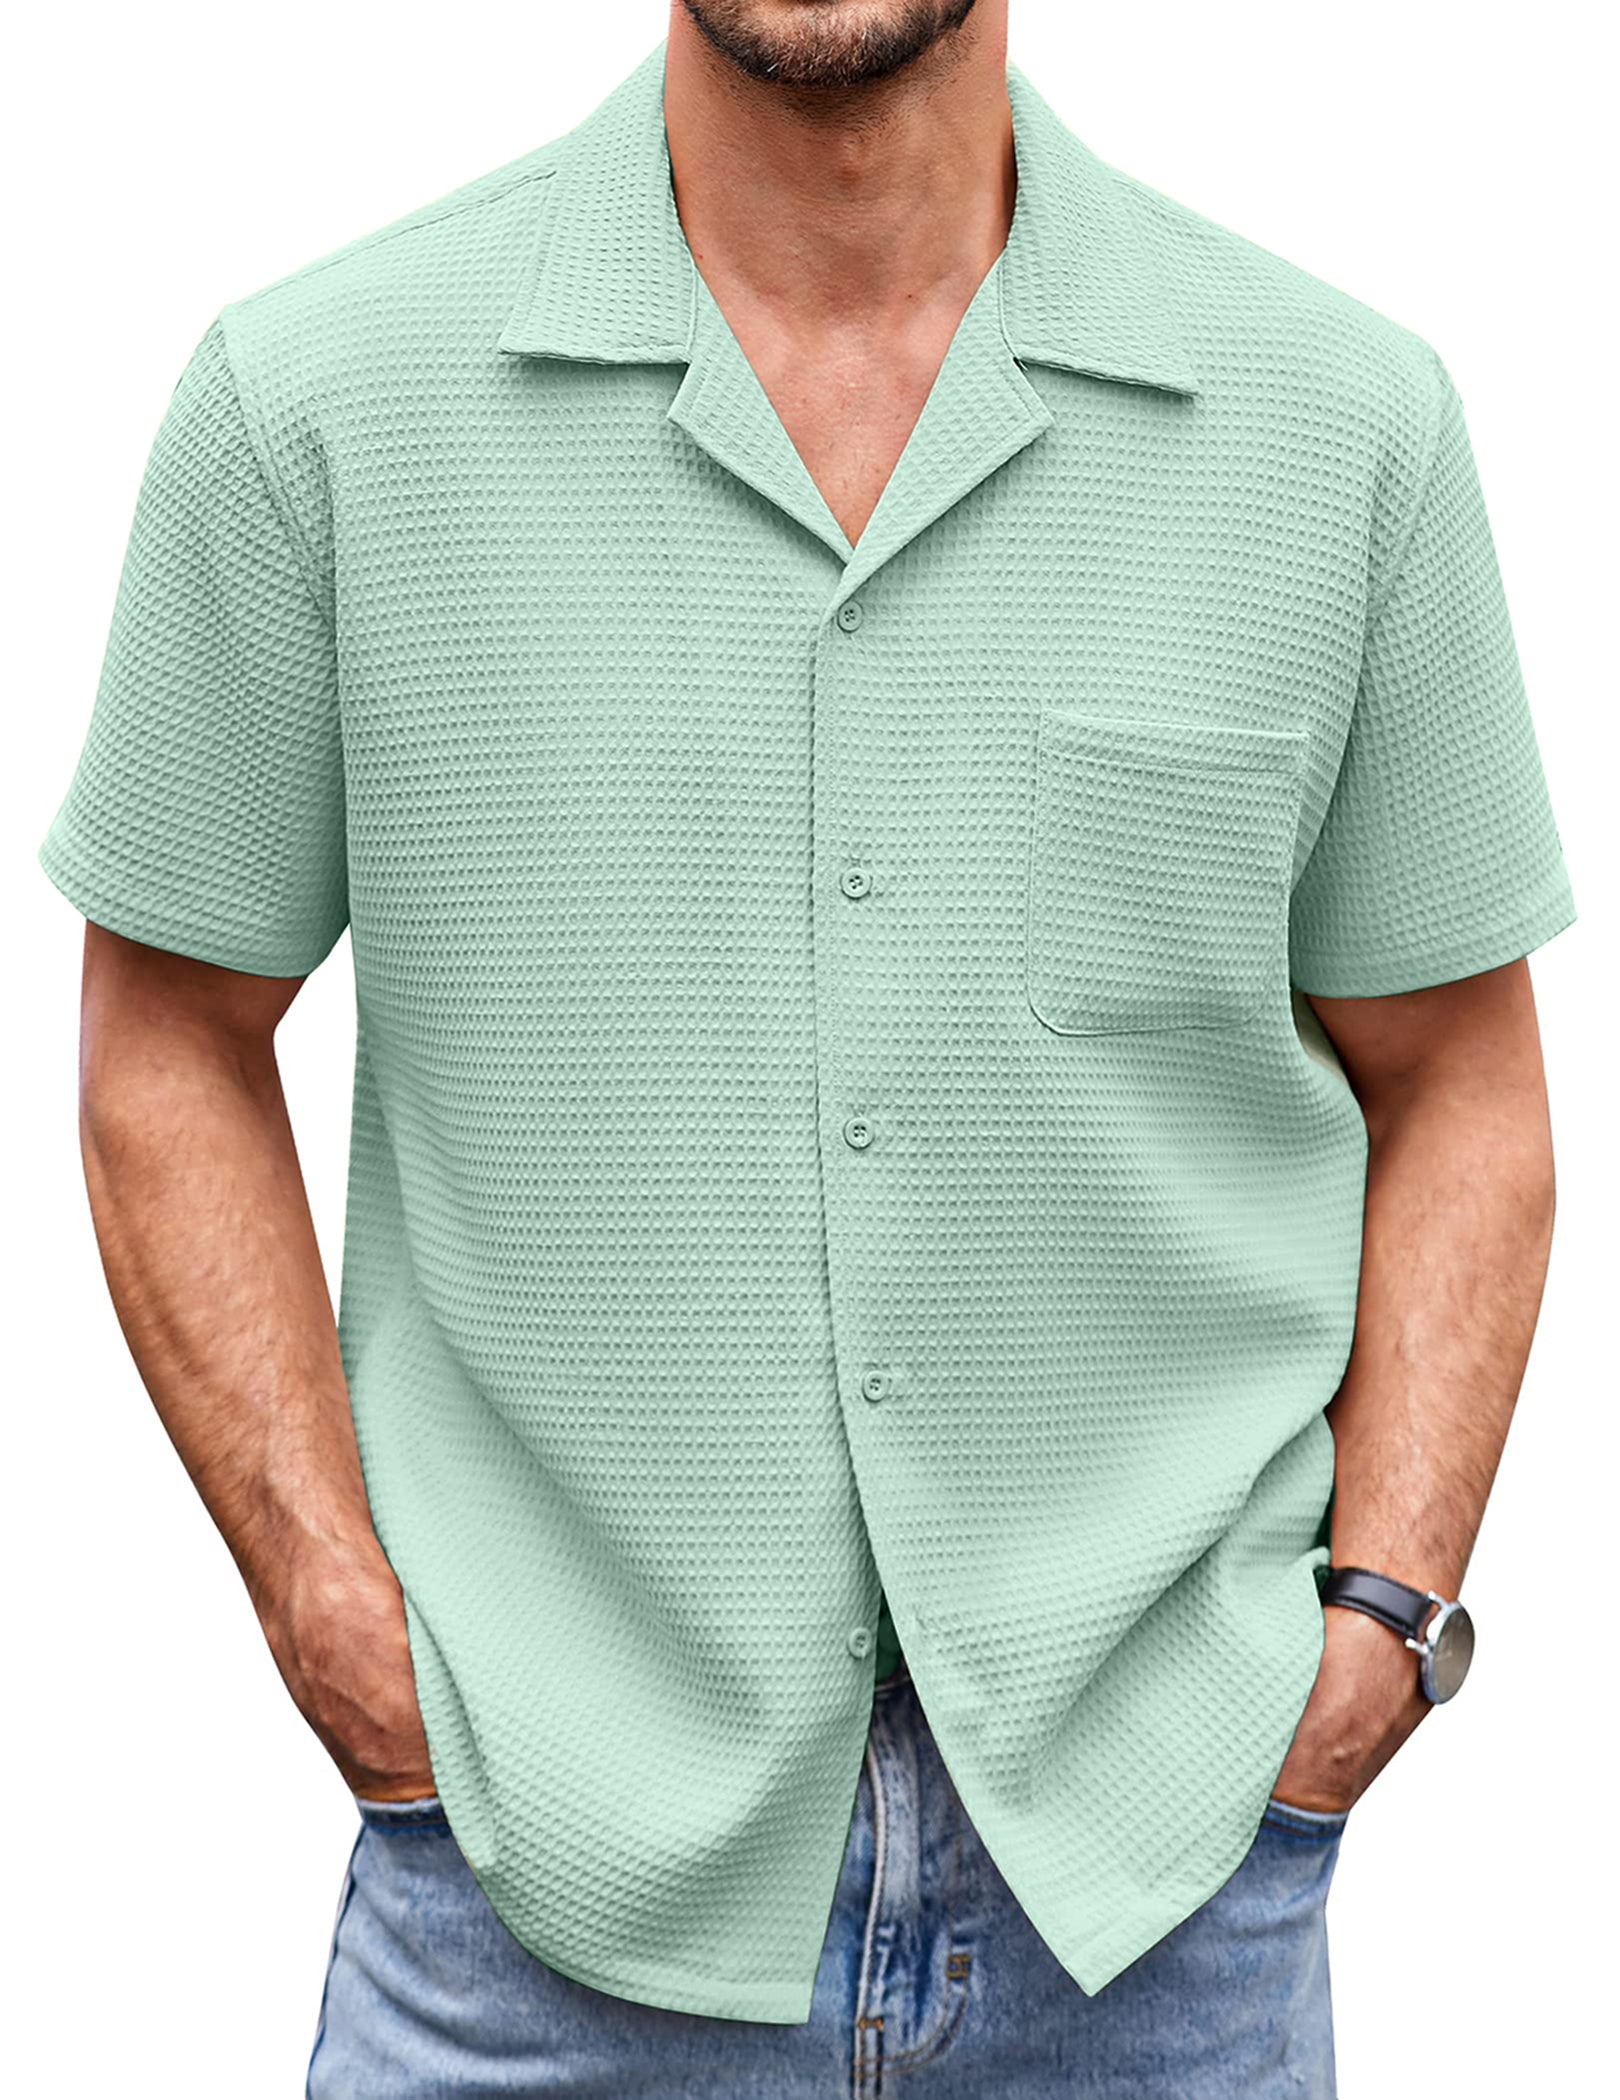 Men's Cuban Collar Pocket Waffle Weave Fabric Casual Comfort Daily Shirt